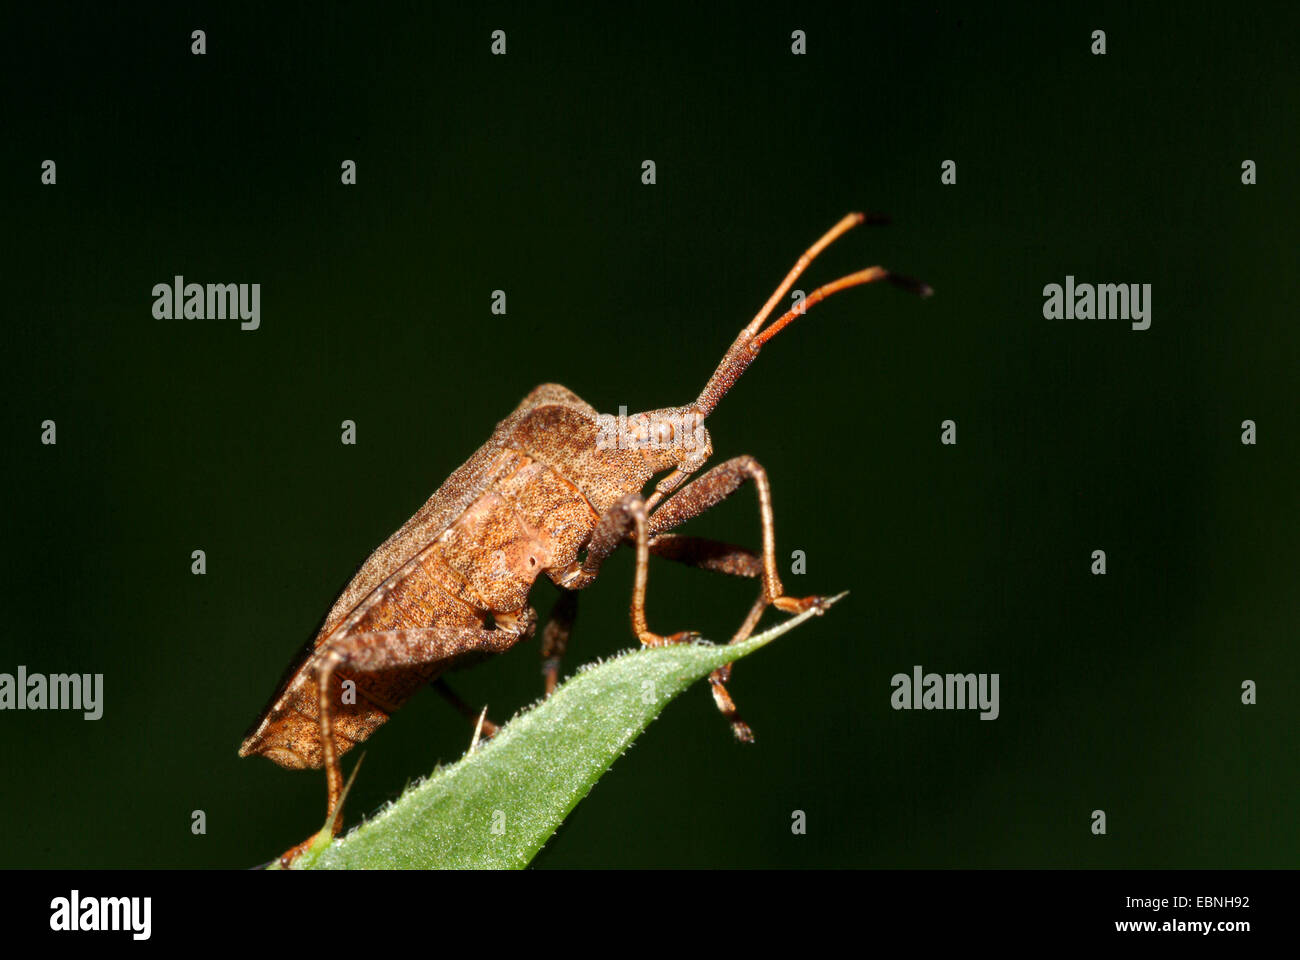 Squash-Bug (Coreus Marginatus, Mesocerus Marginatus), sitzt auf einem Blatt, Deutschland Stockfoto